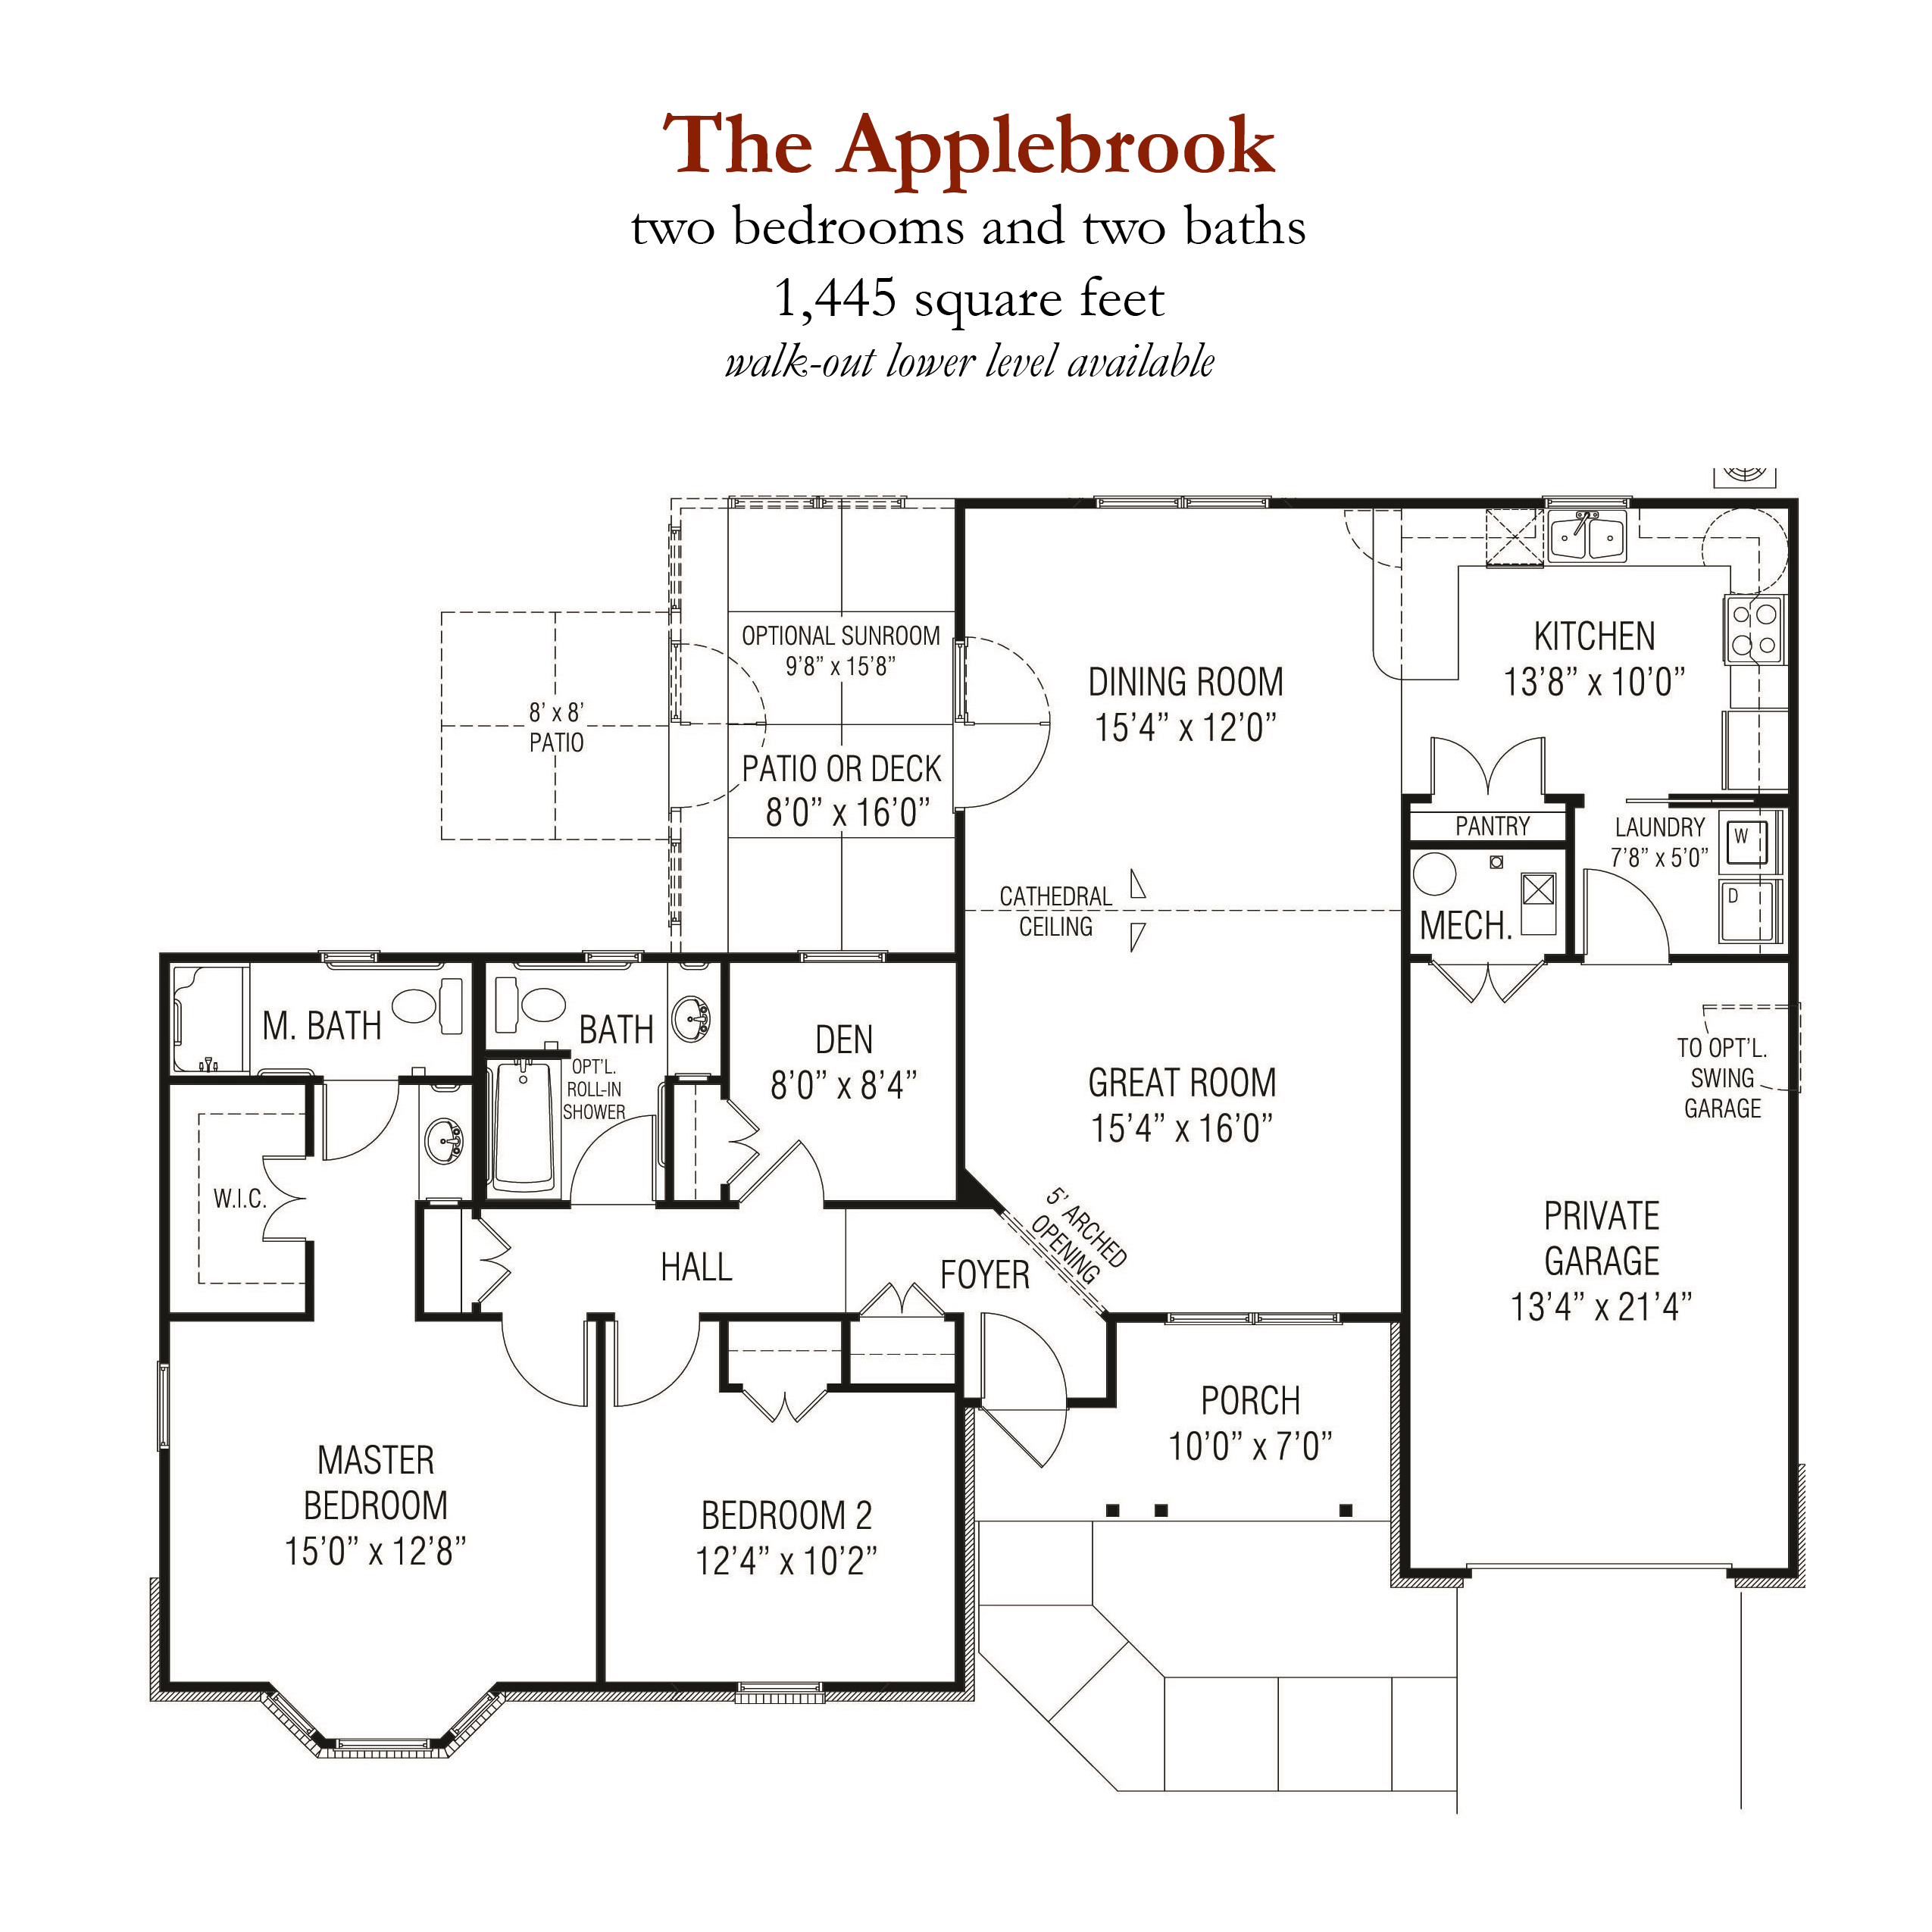 The Applebrook senior living - 2 bedrooms and 2 bathrooms floor plan